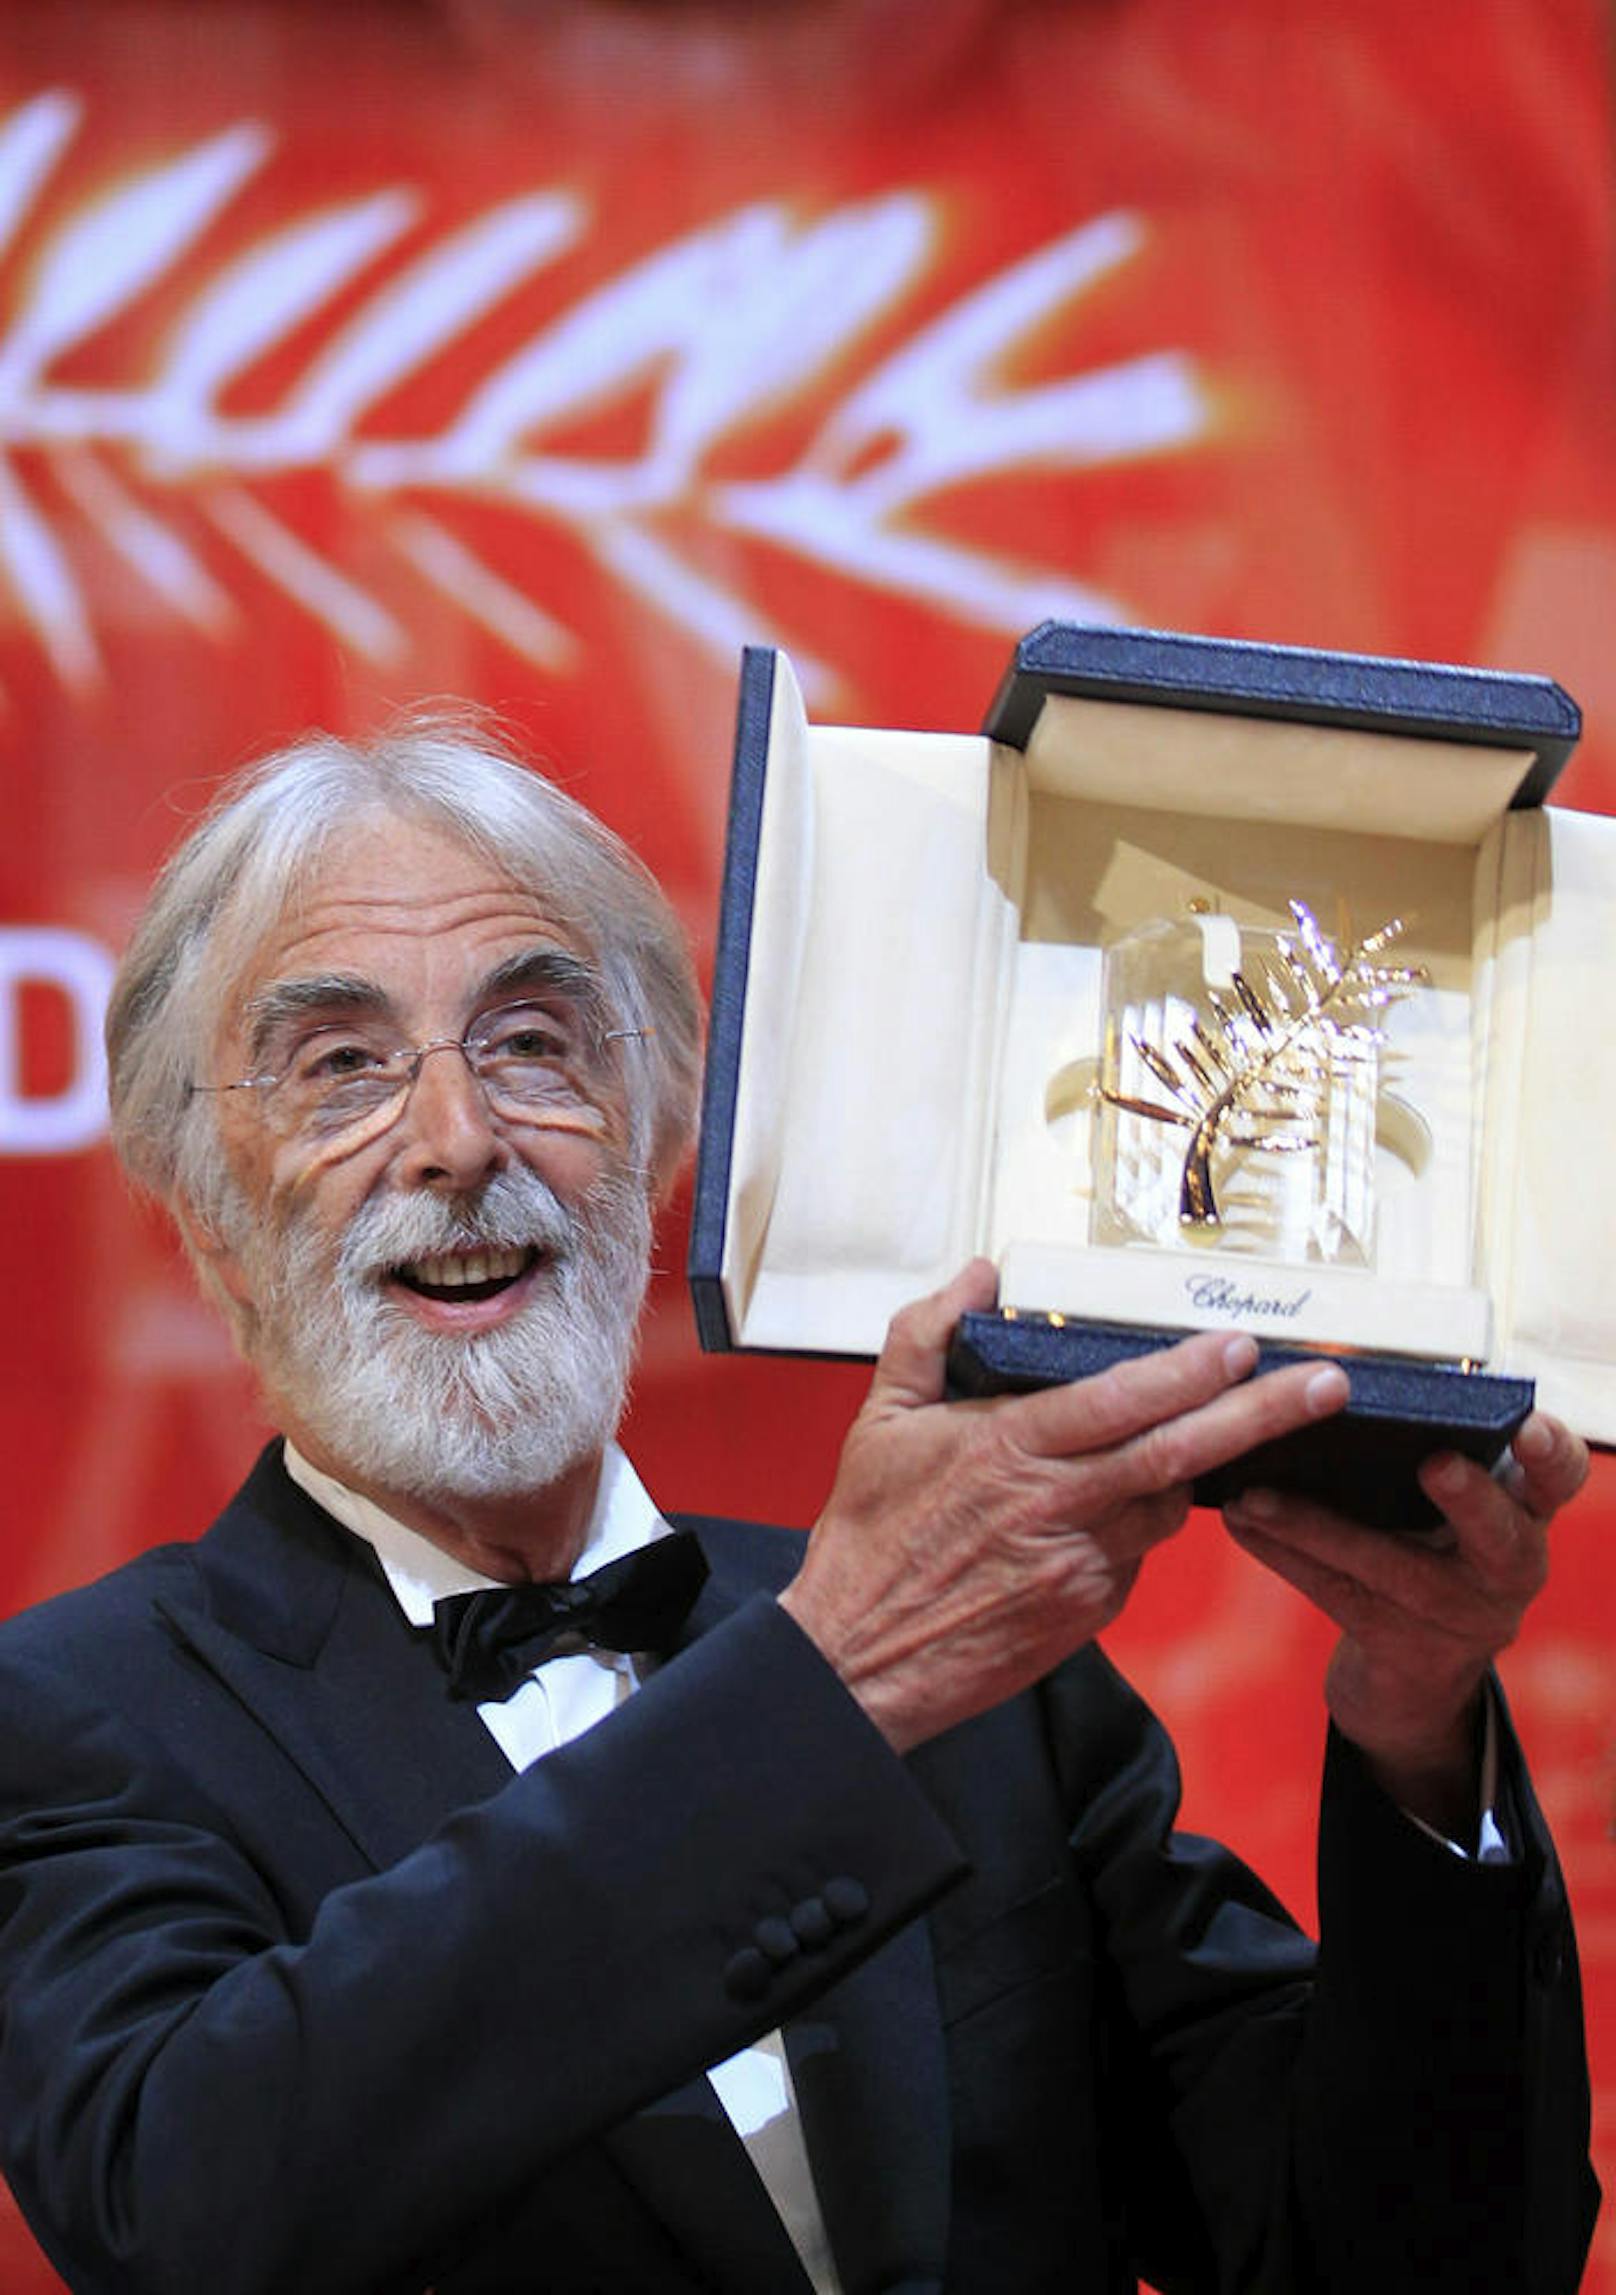 Regisseur Michael Haneke erhält den "Palme d'Or award" für den Film "Amour"